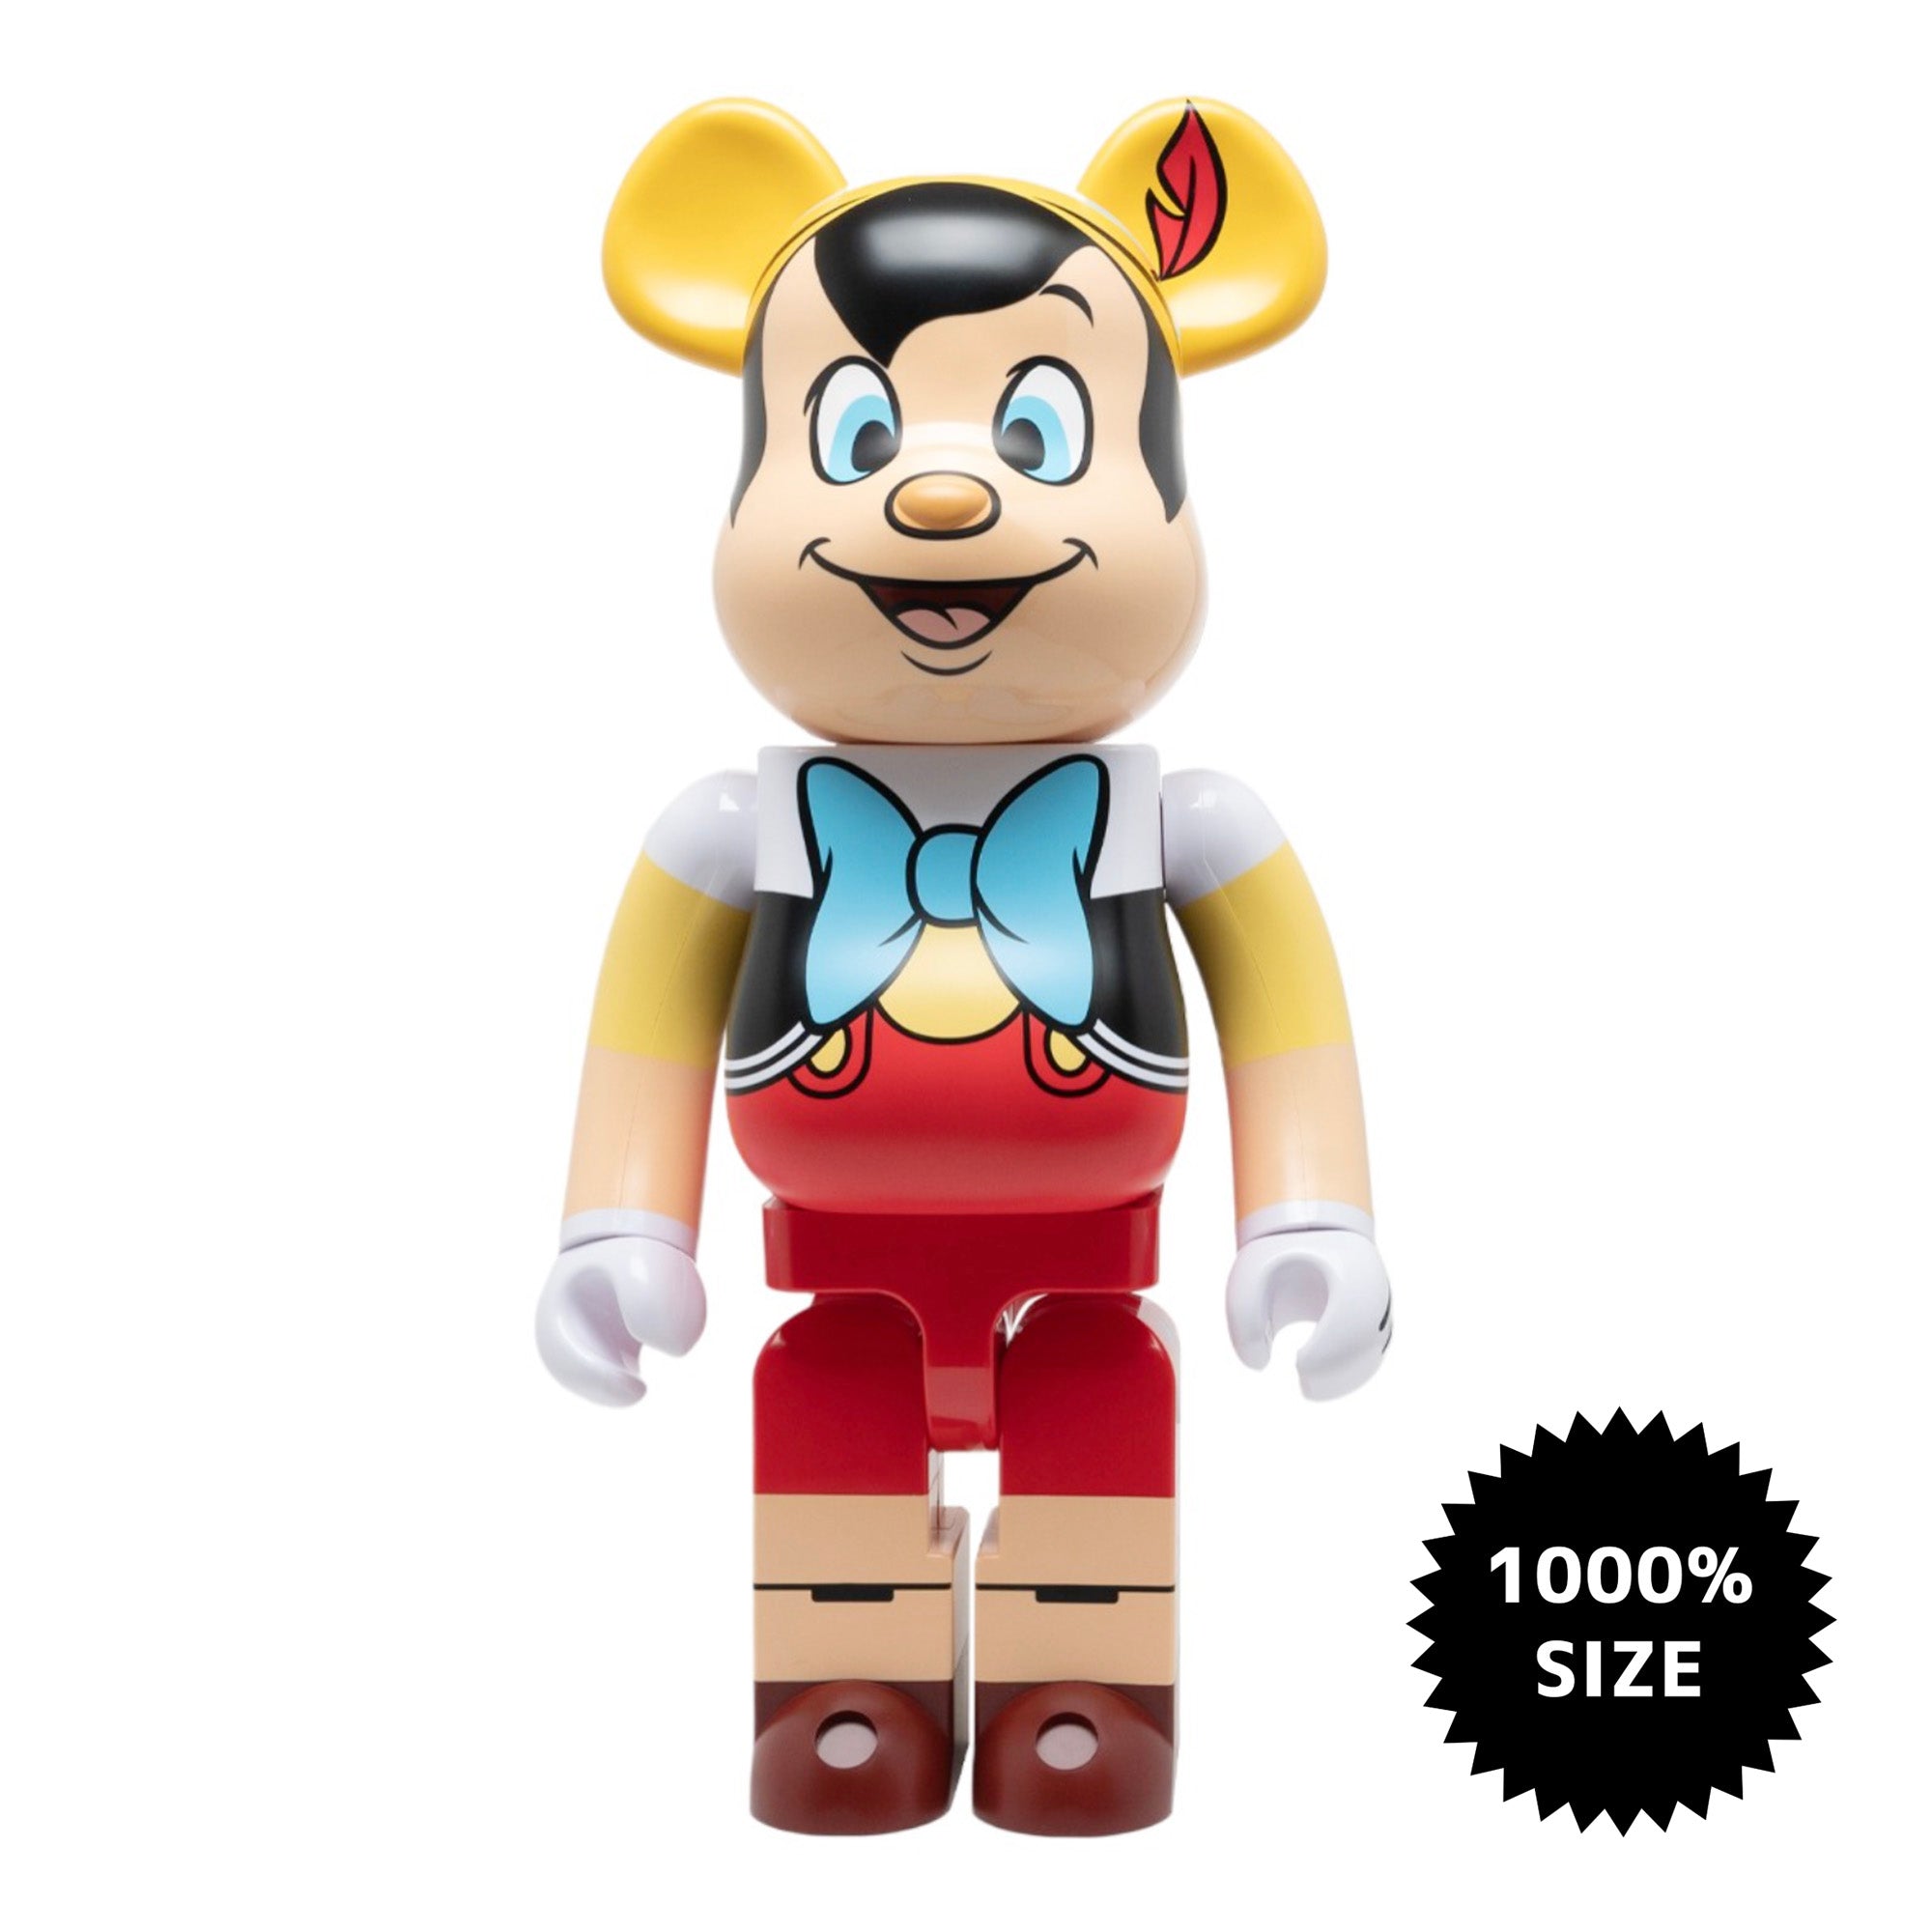 MEDICOM TOY: BE@RBRICK - Disney Pinocchio 1000%